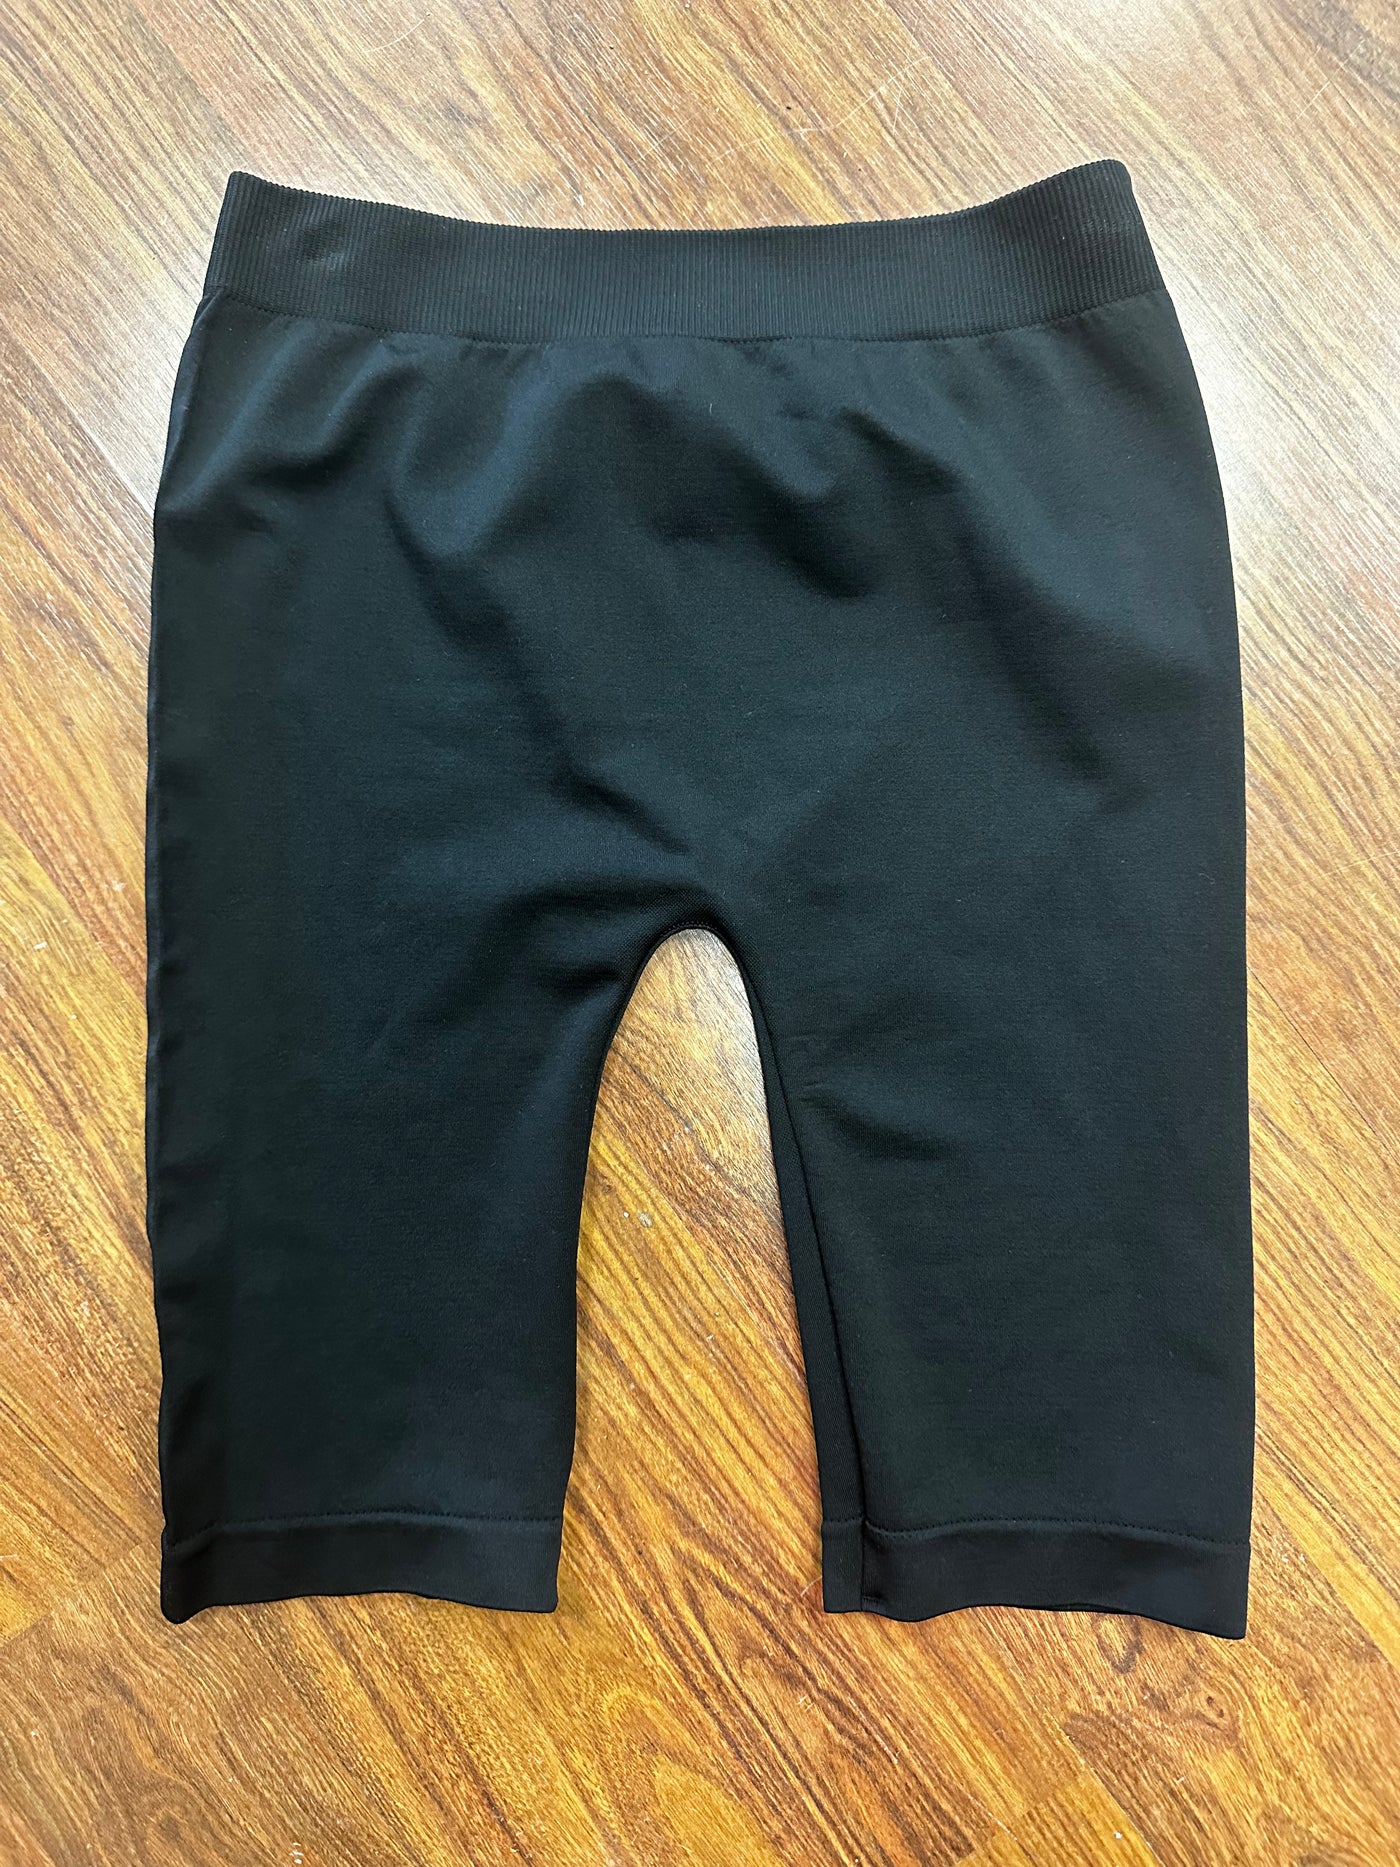 One Size Black Biker Shorts